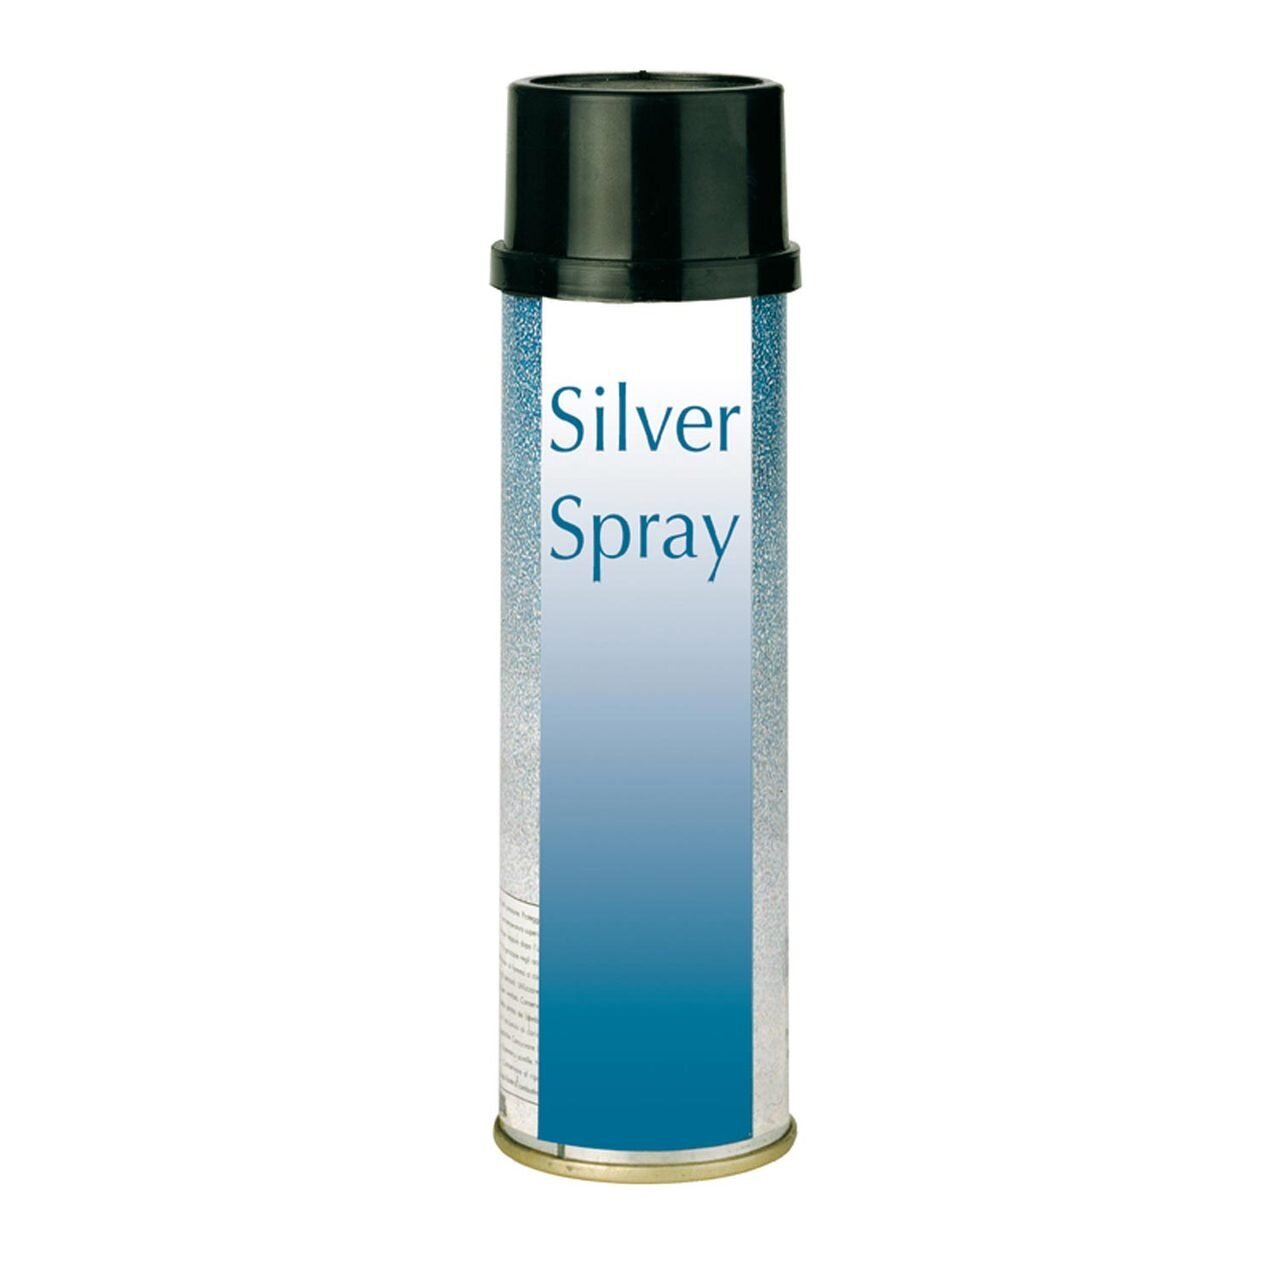 Sambonet Care Products Silver Spray 59780-25